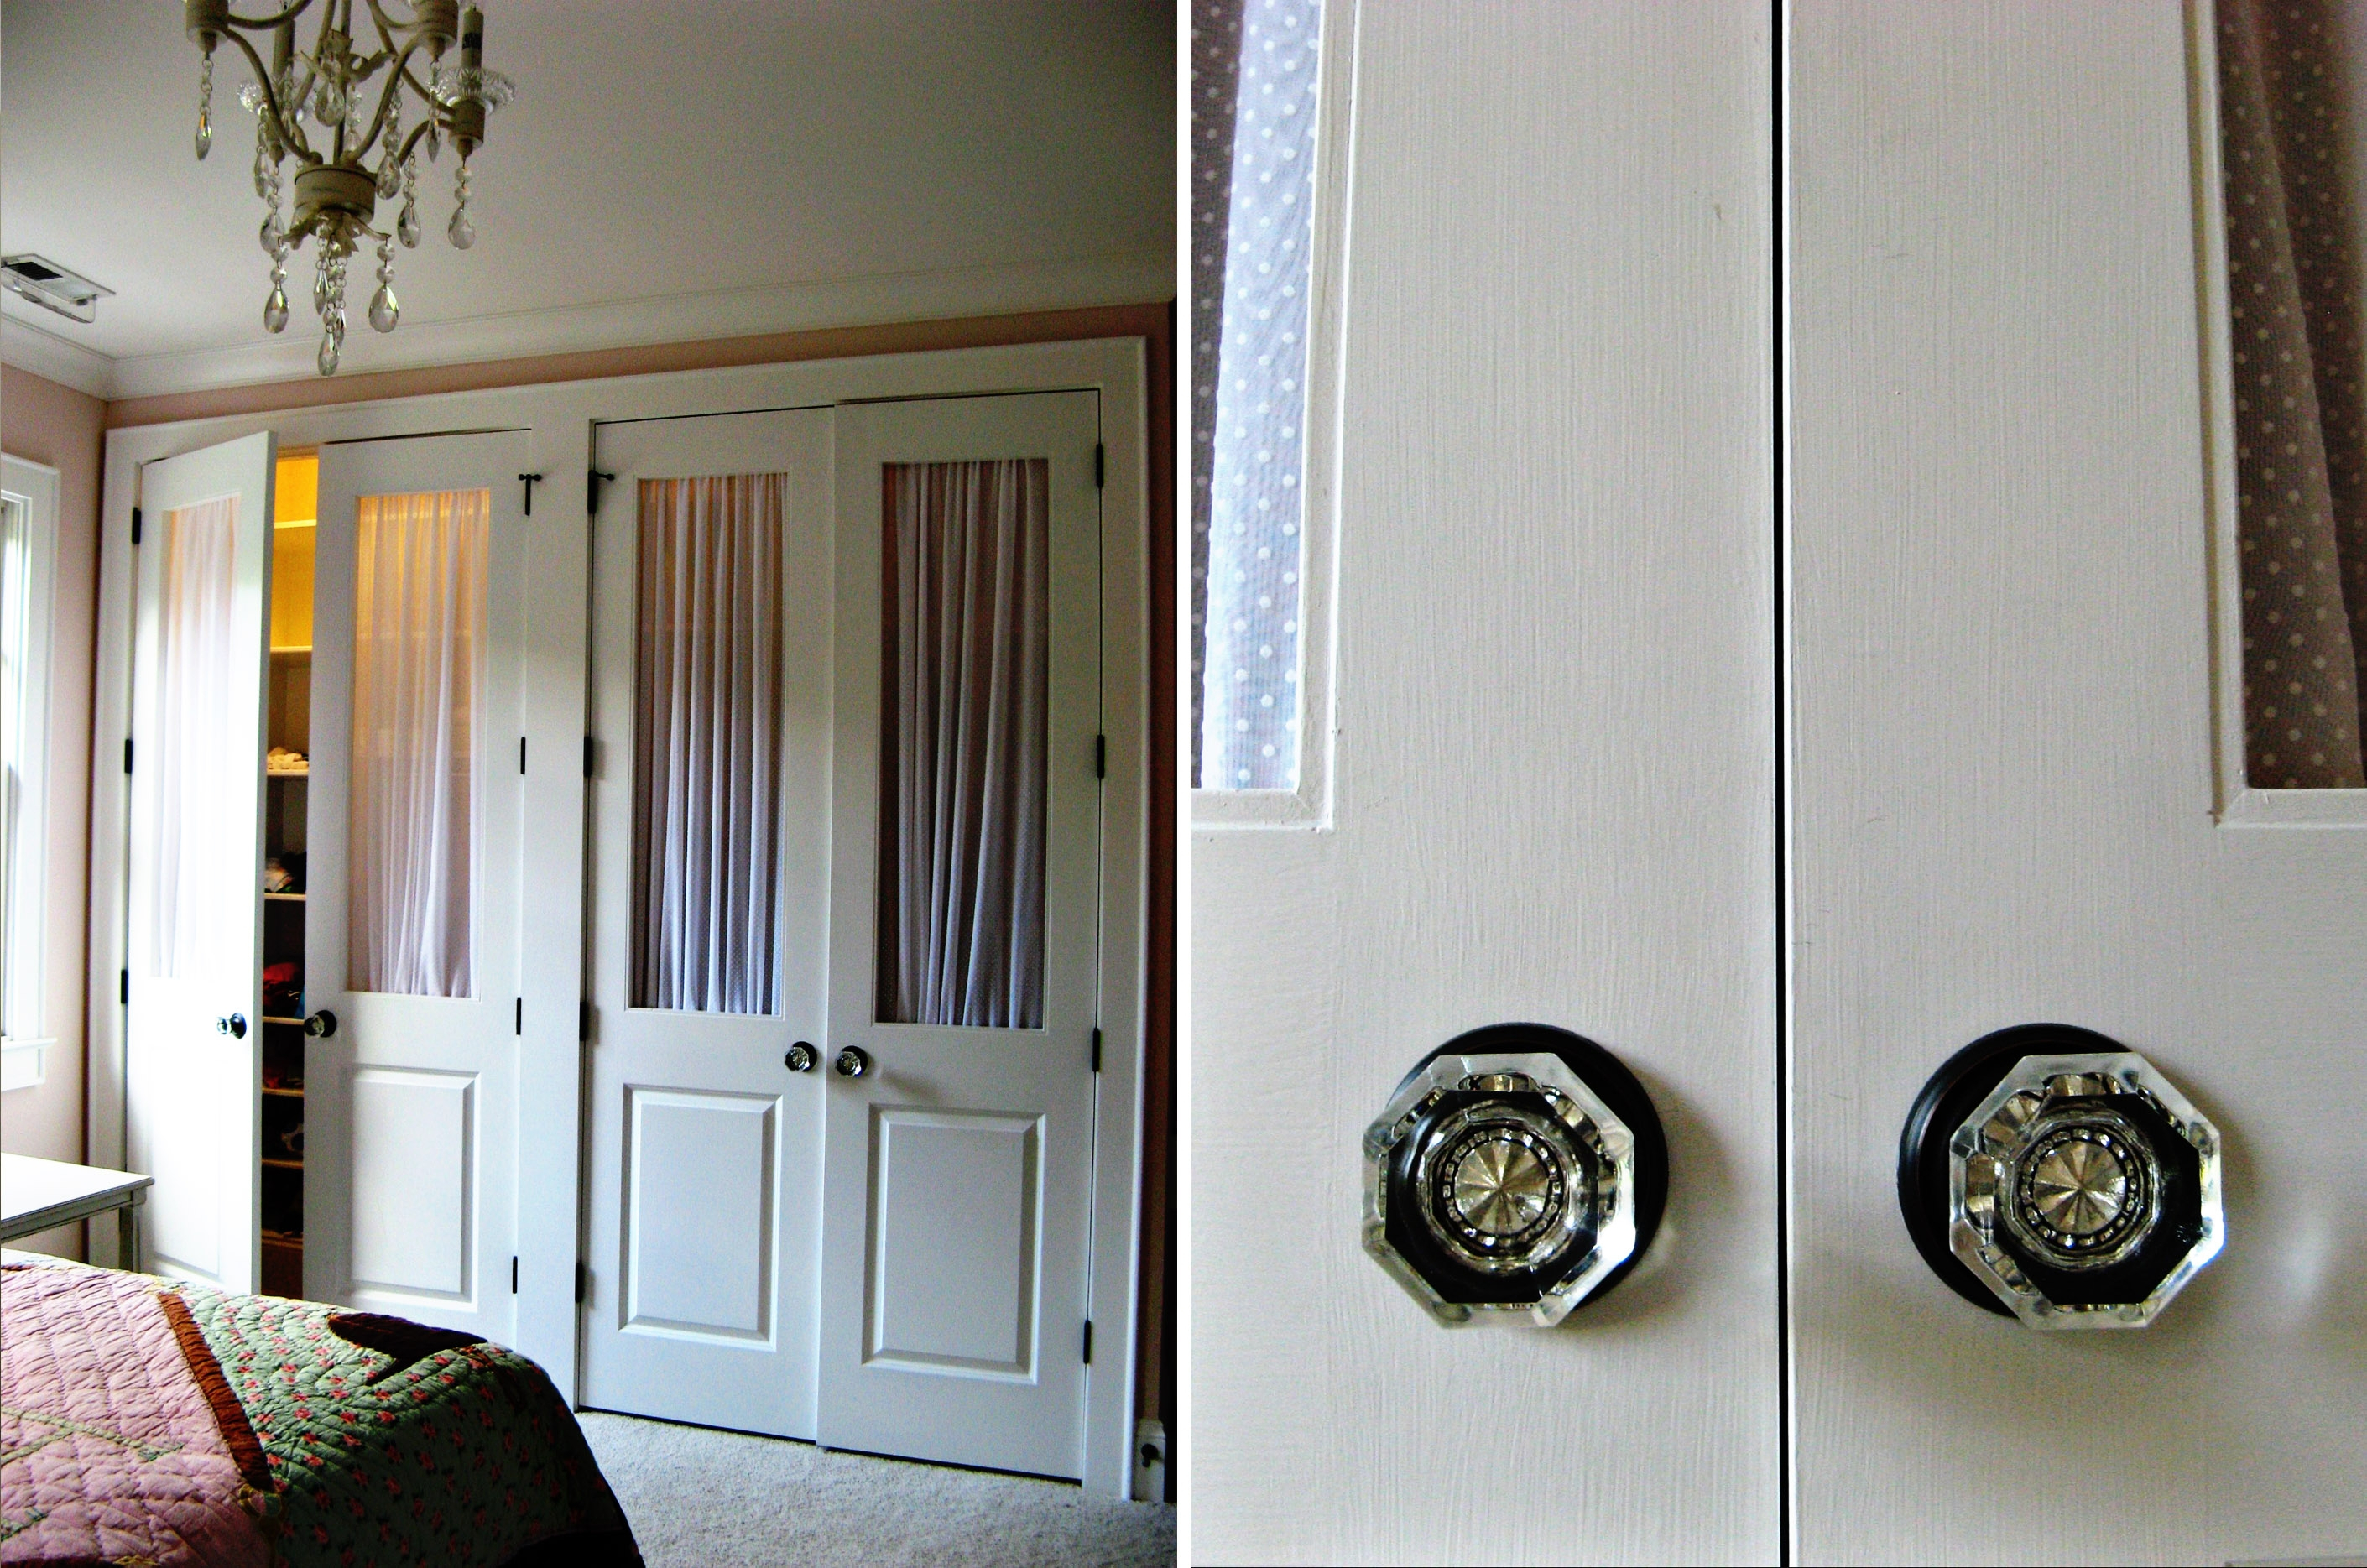 Closet Door Knobs For Nursery Doors Ideas intended for size 2821 X 1869